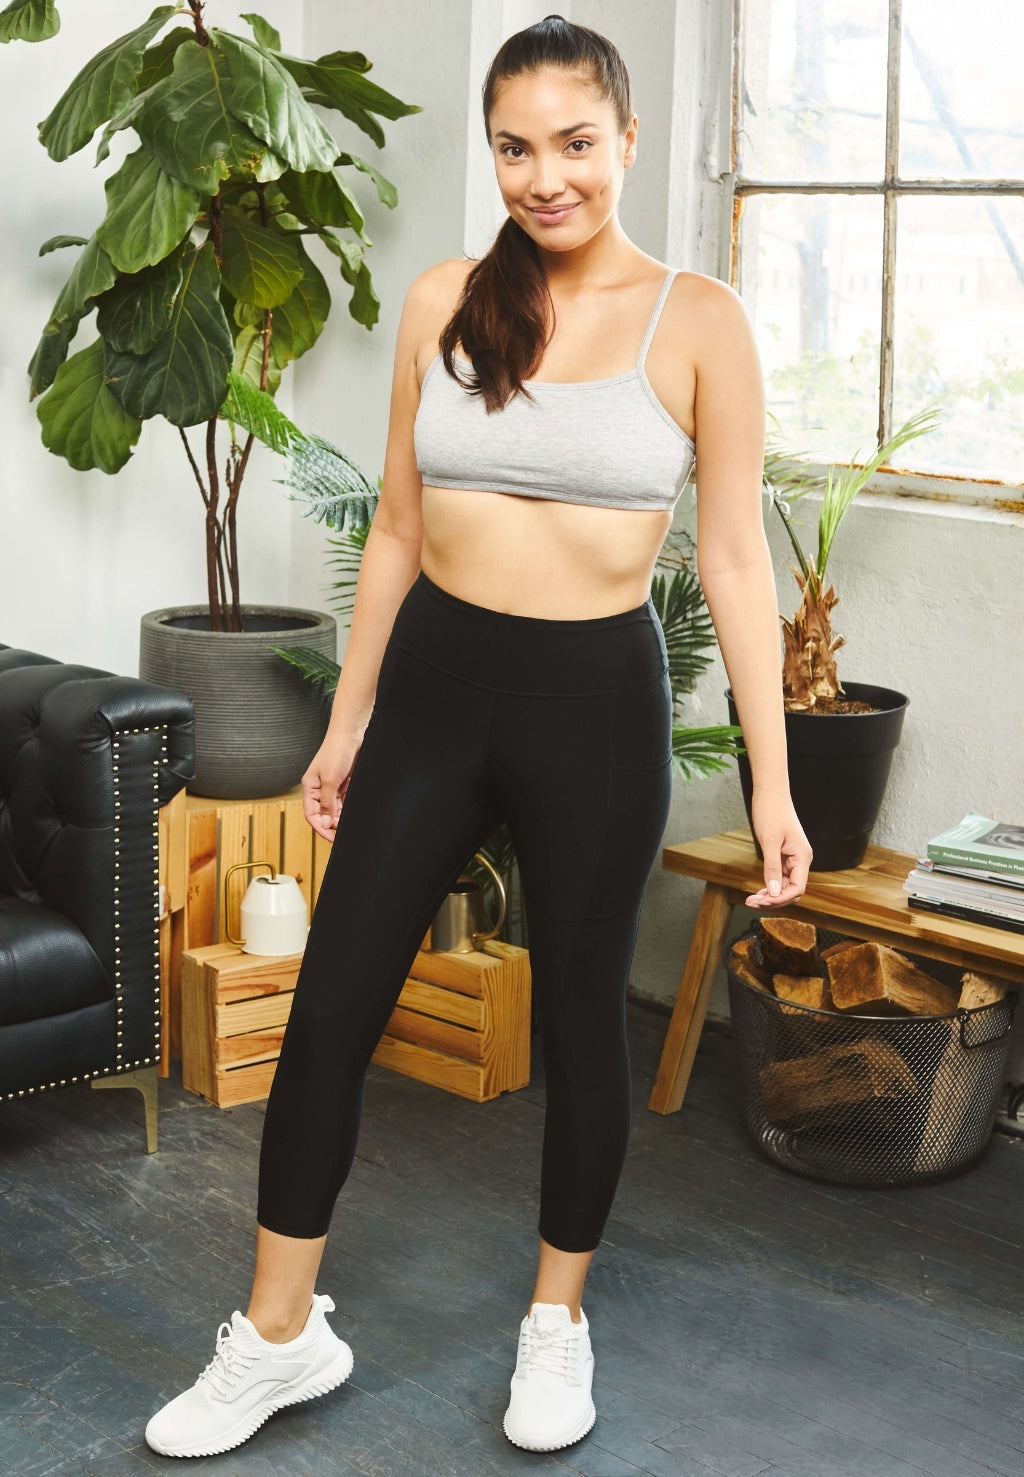 Women's shaping fitness cardio high-waisted leggings, black